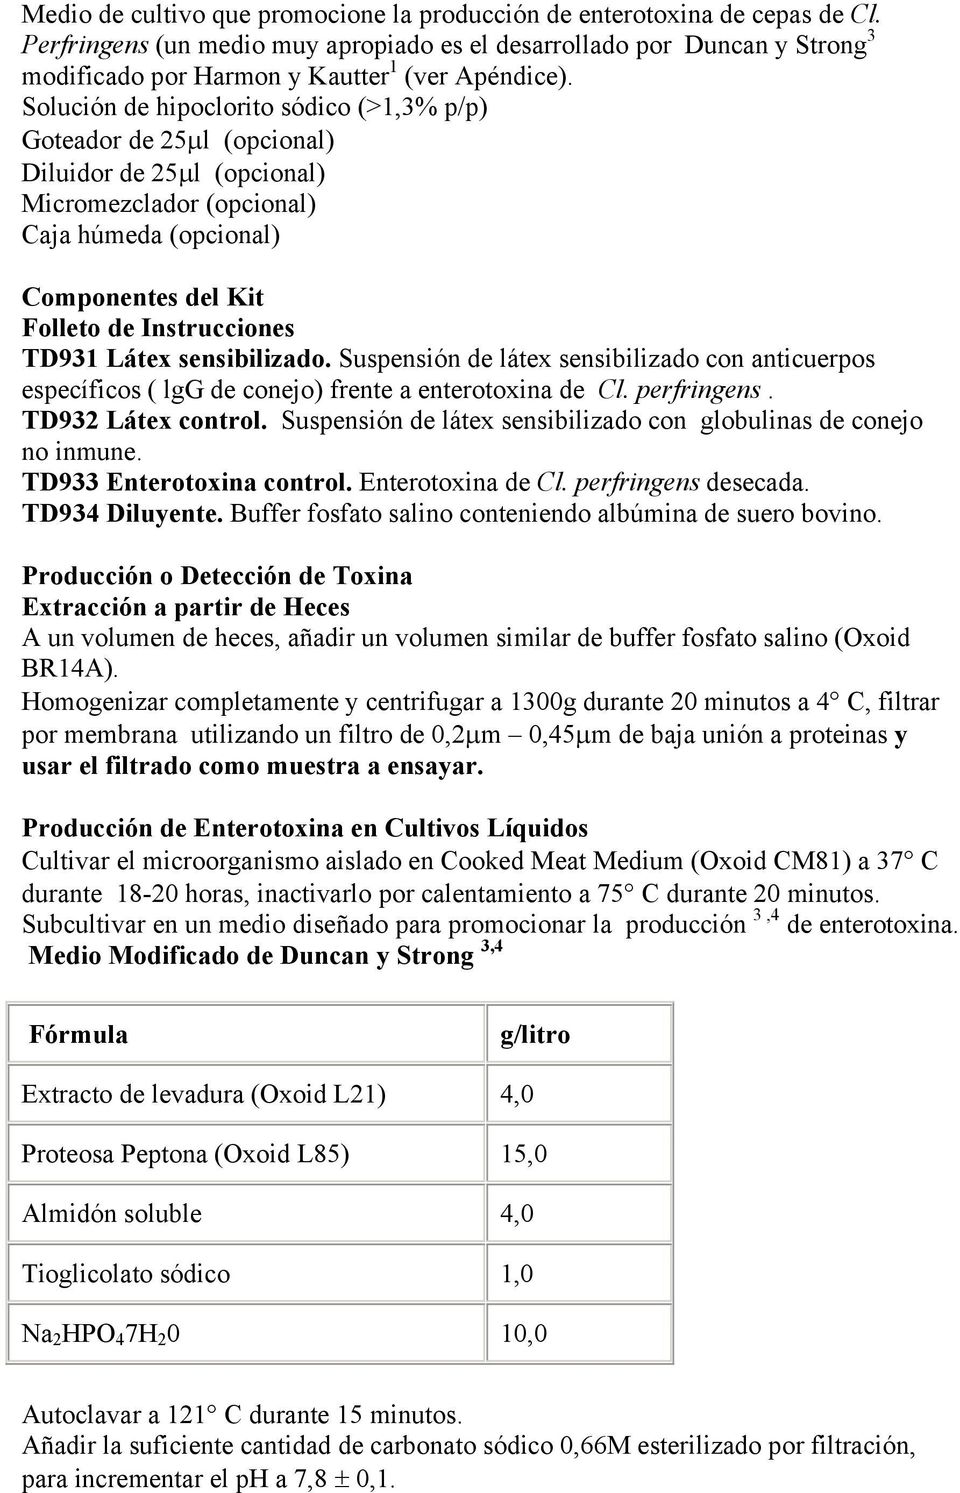 Solución de hipoclorito sódico (>1,3% p/p) Goteador de 25µl (opcional) Diluidor de 25µl (opcional) Micromezclador (opcional) Caja húmeda (opcional) Componentes del Kit Folleto de Instrucciones TD931